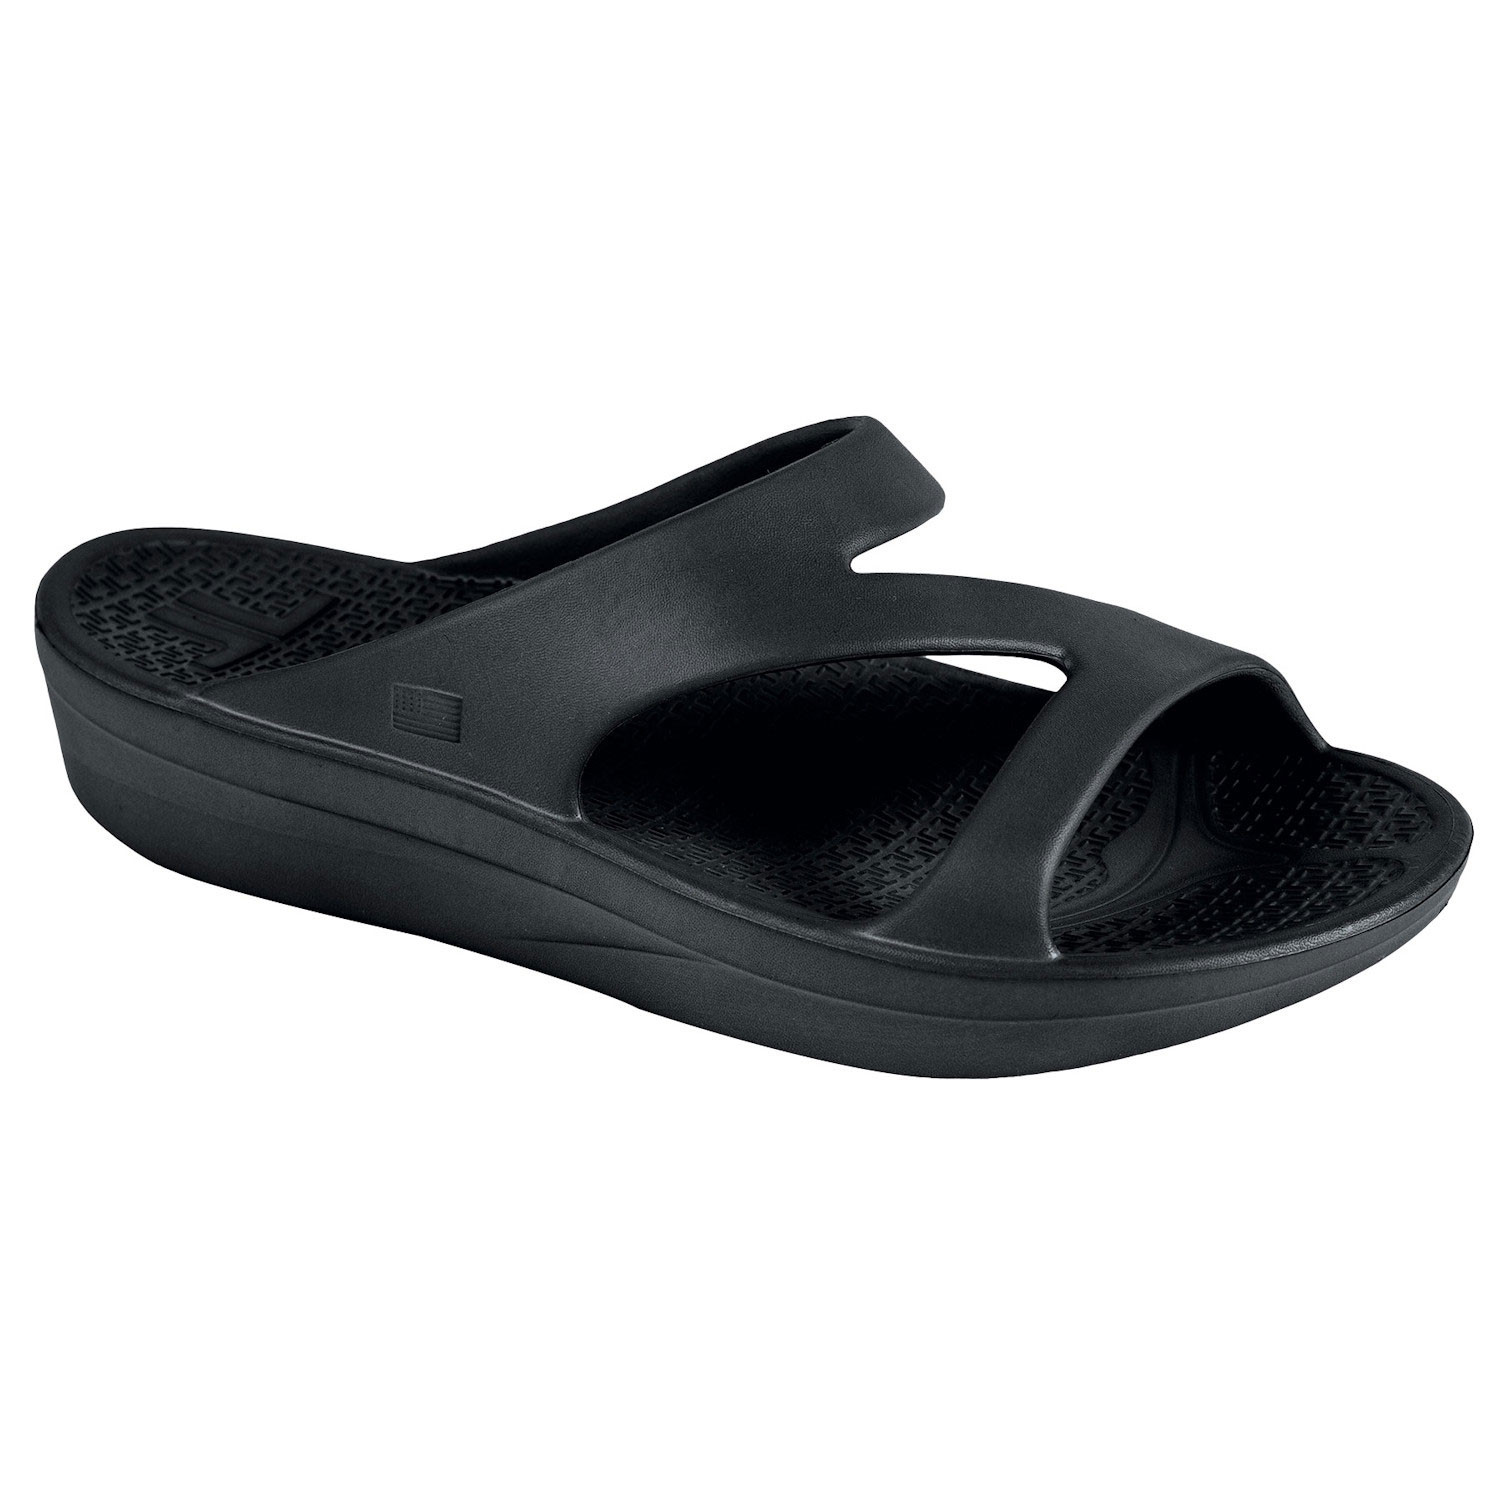 Z-Strap Sandals | Support Plus